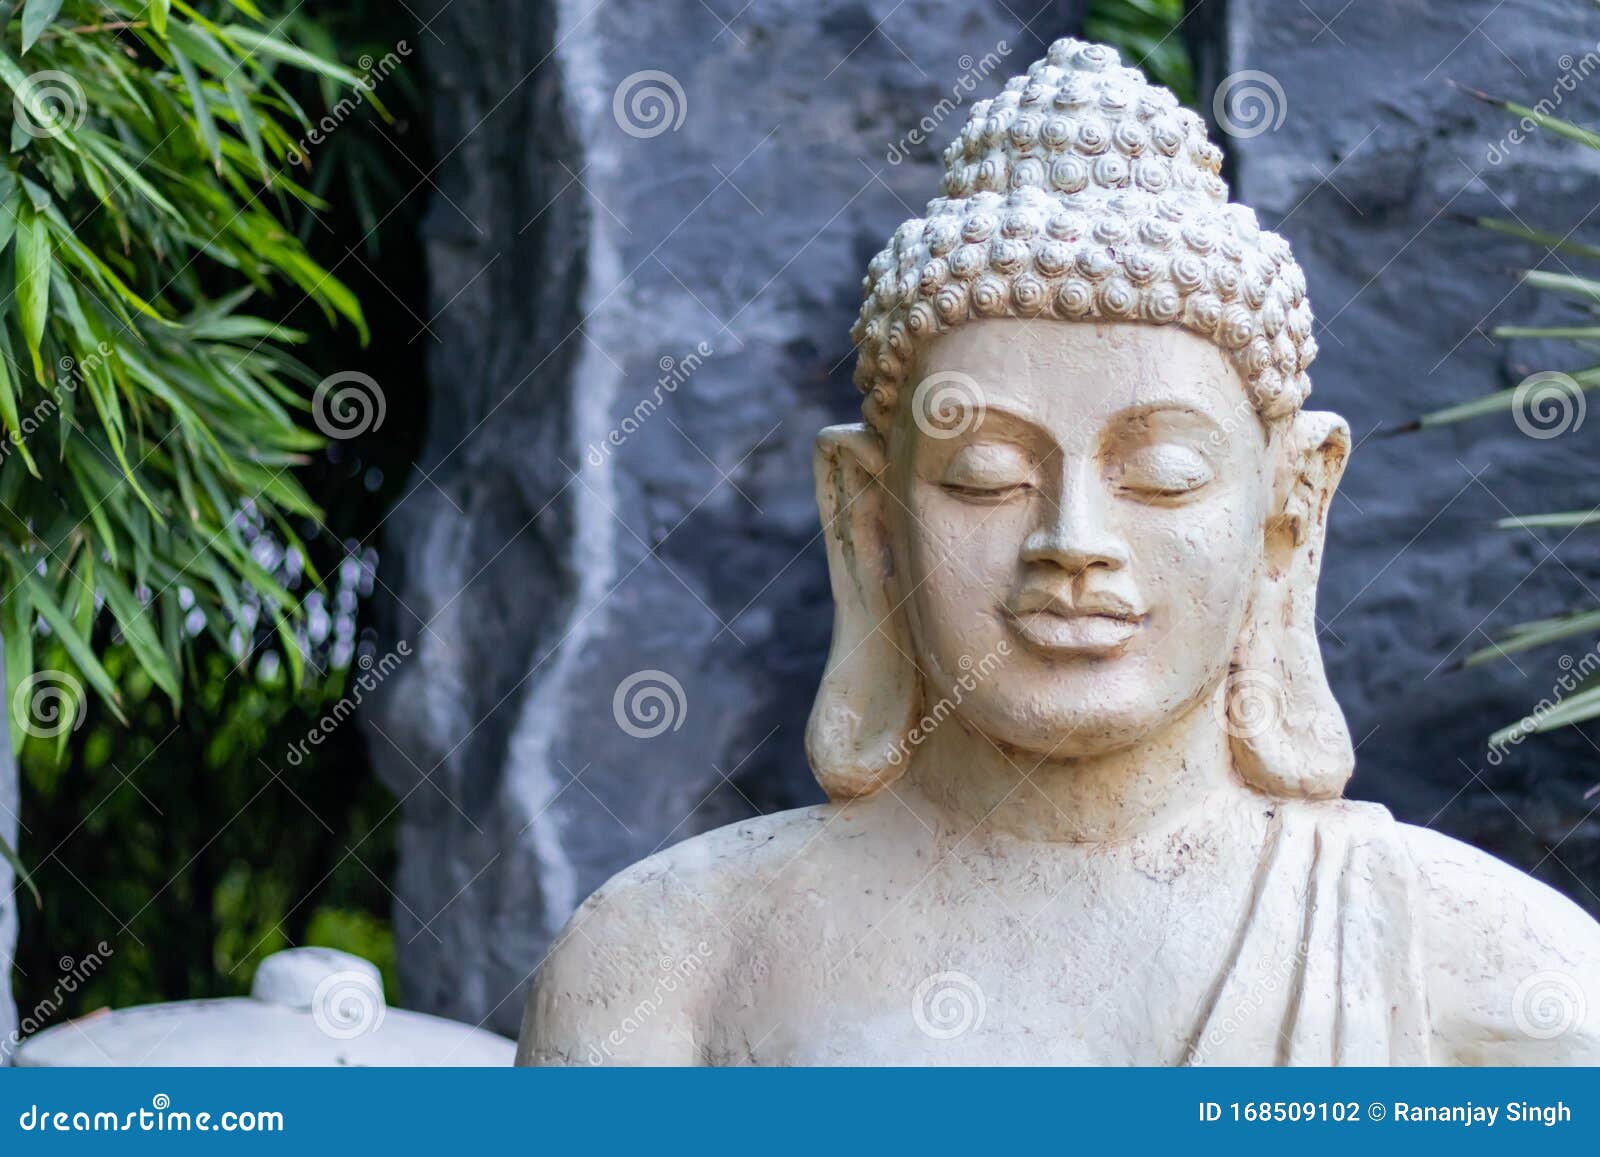 Meditative Pose of a Buddha Statue Face Closeup. Peace Concept ...